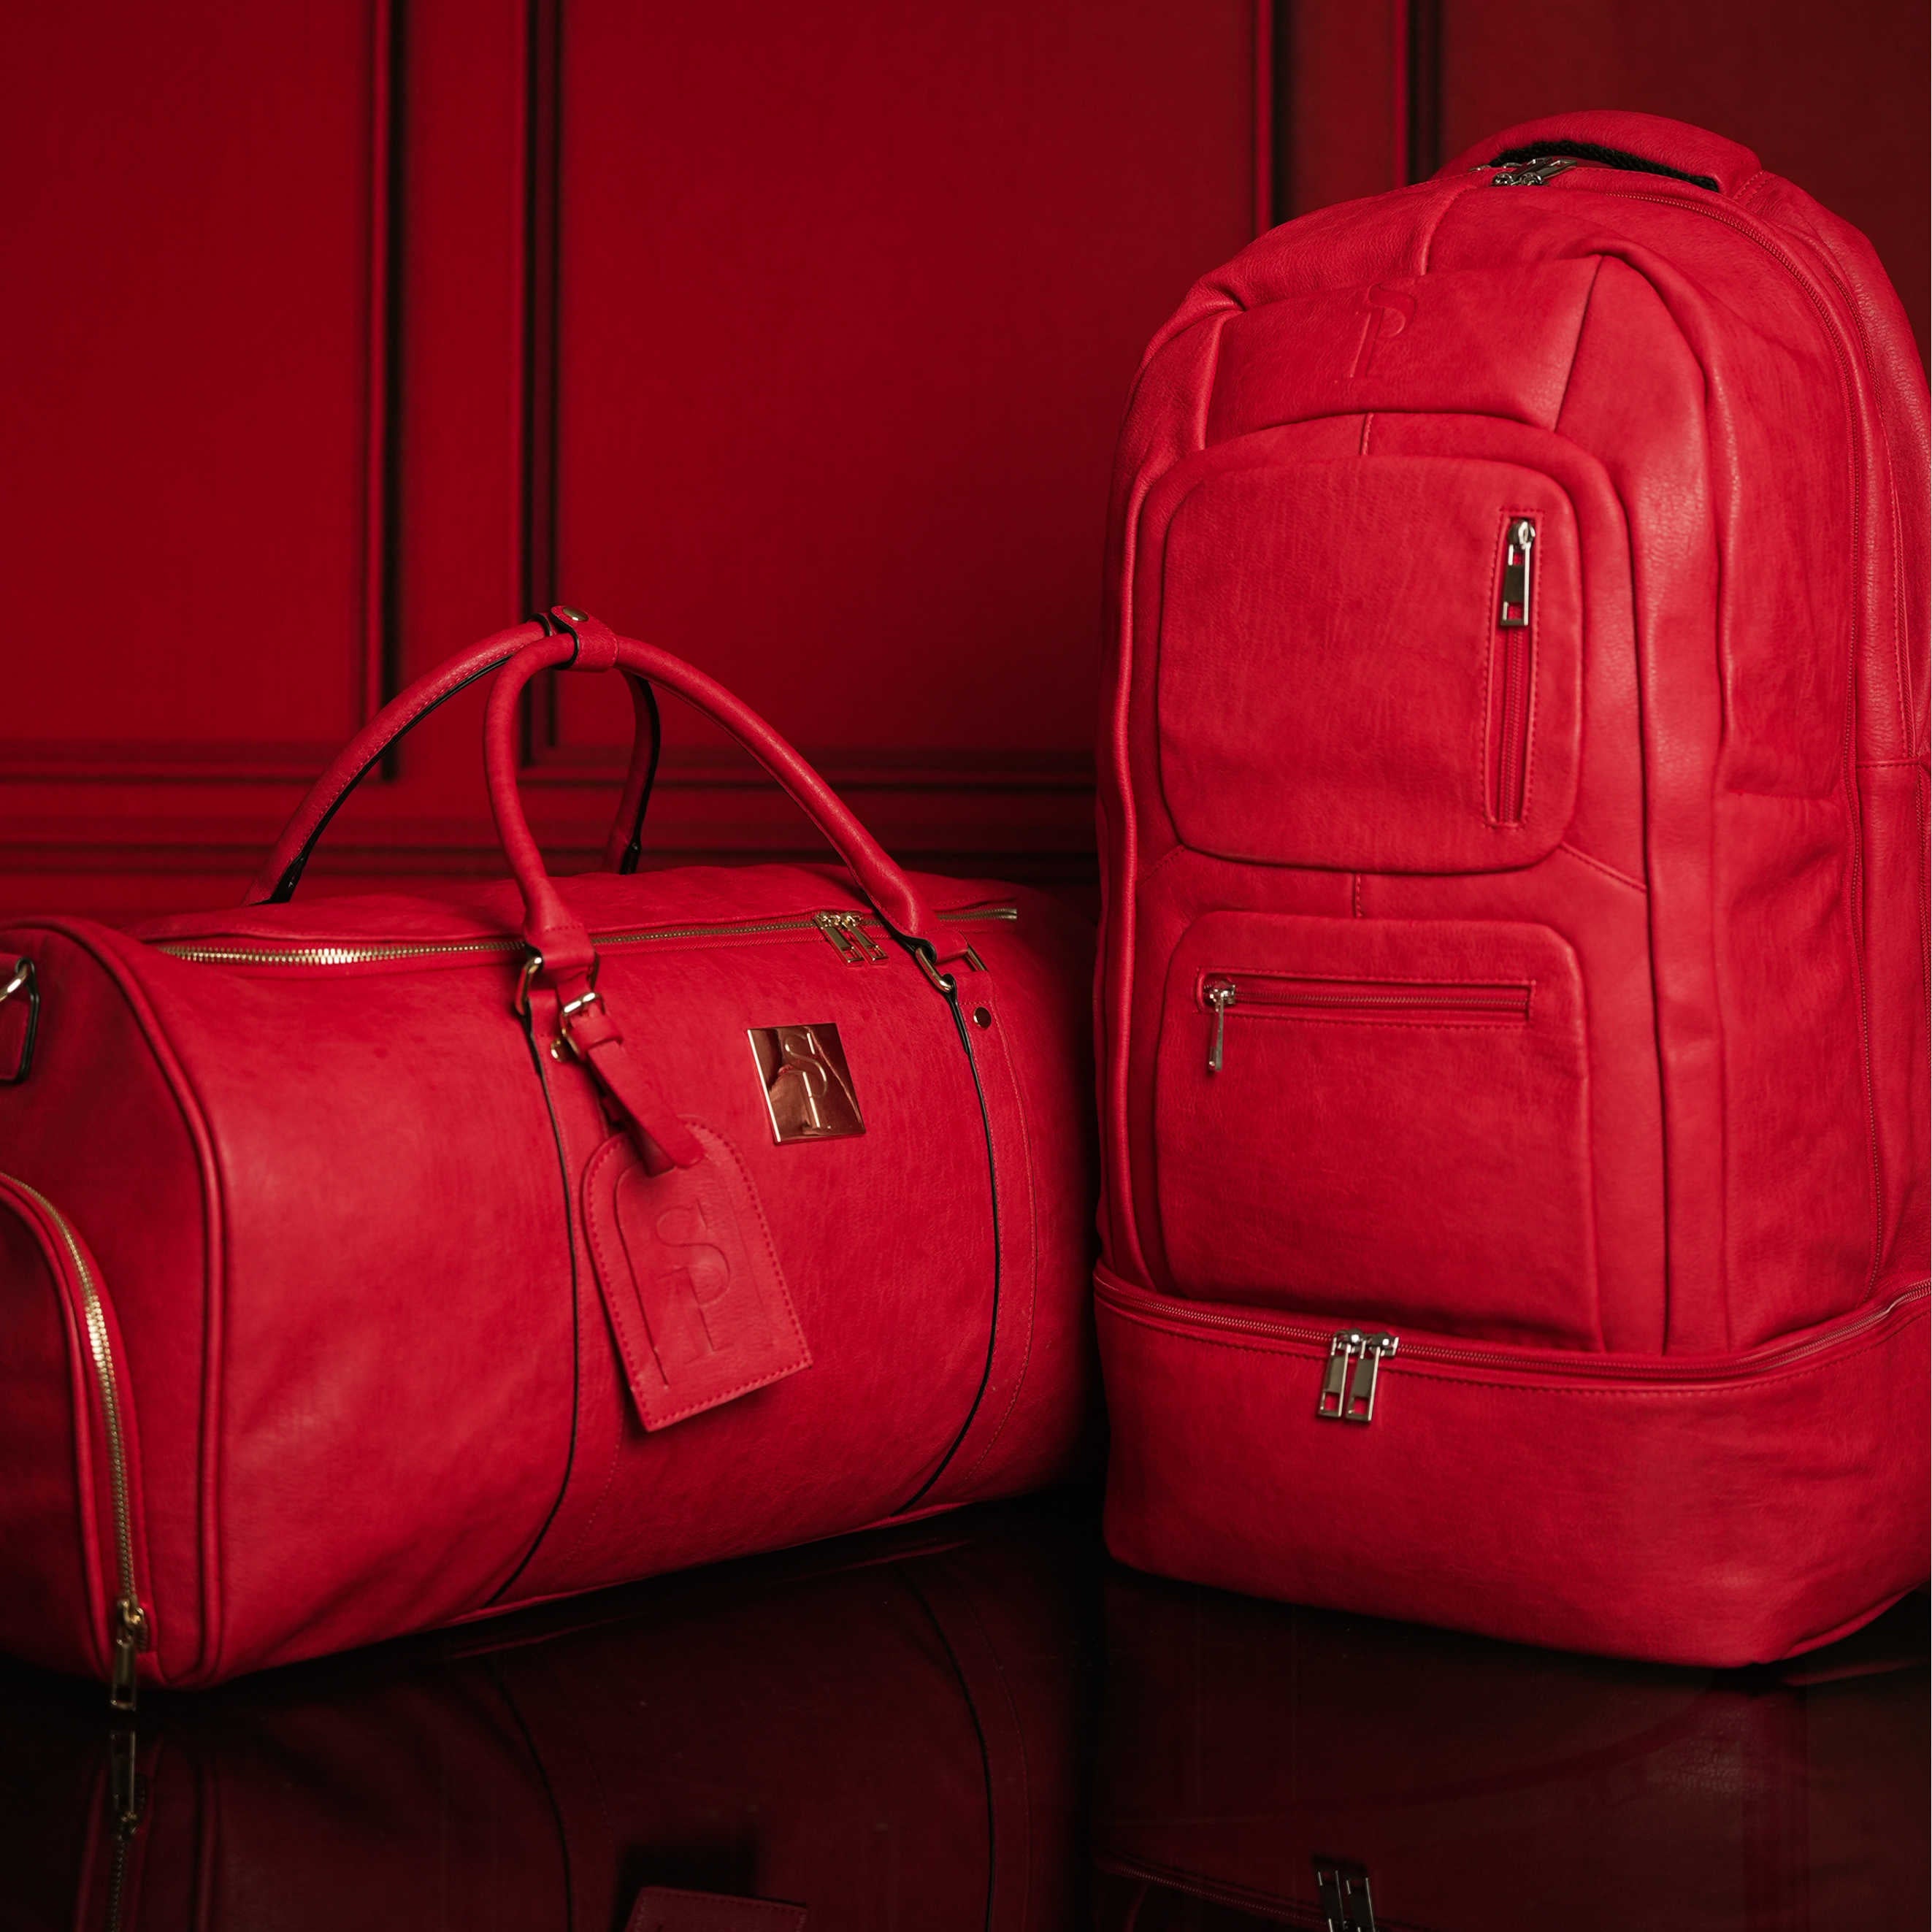 Red Tumbled Leather Signature Bag Set (Signature and Duffle Bag)